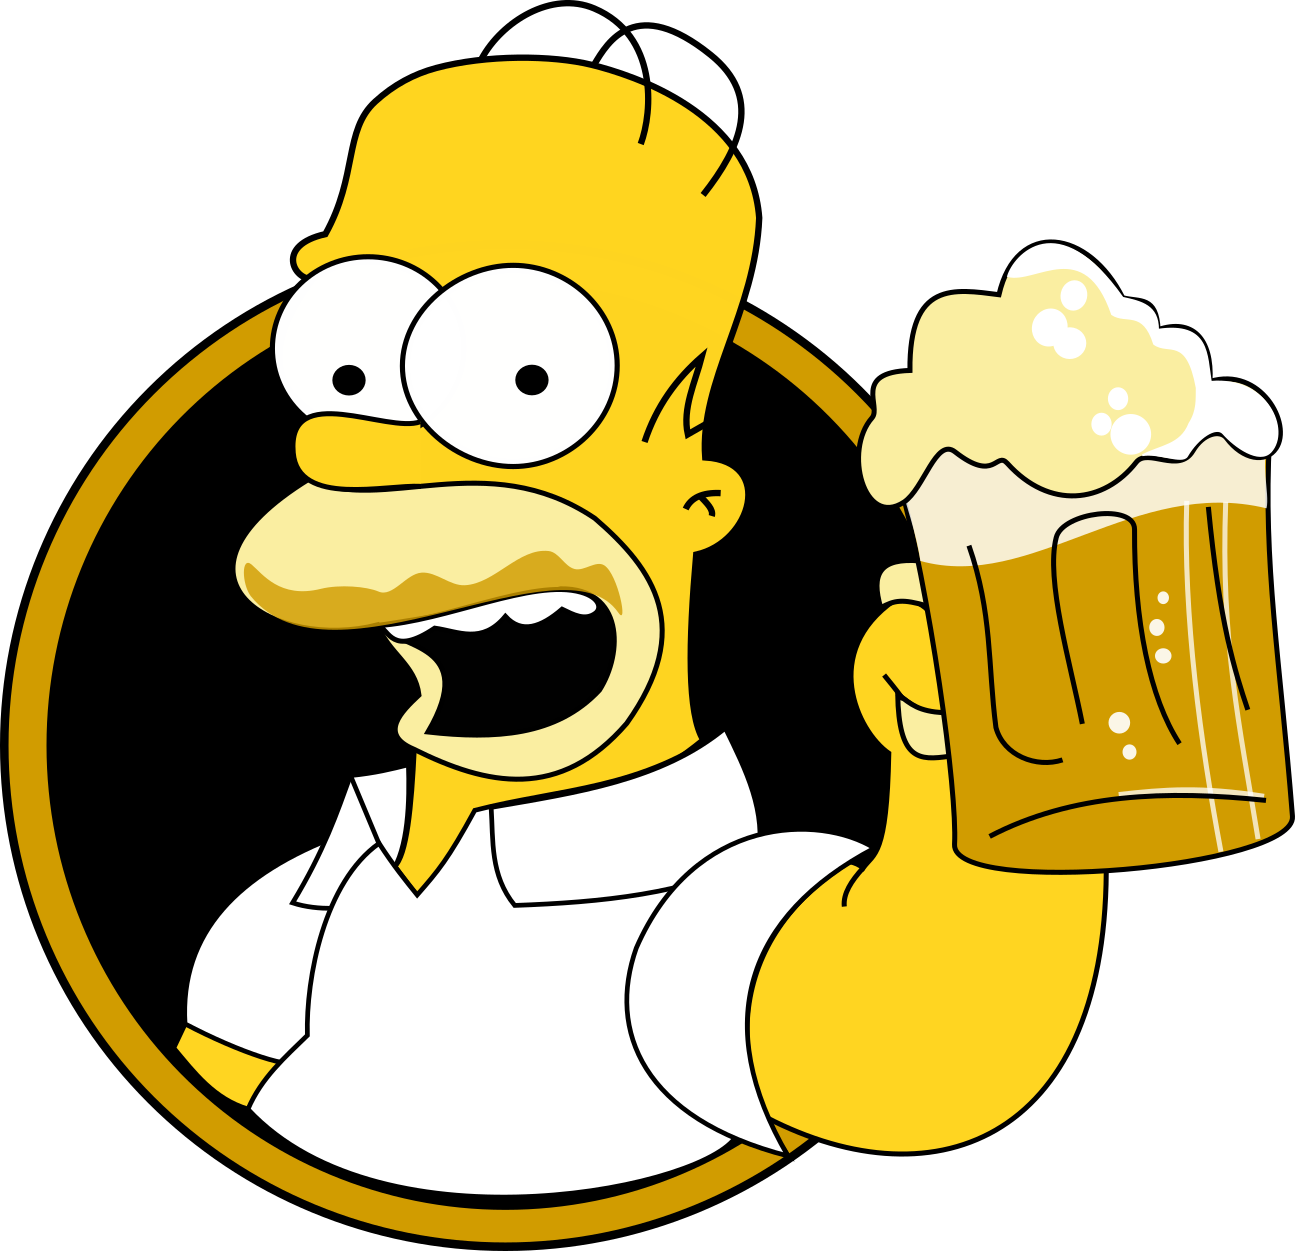 Animated Character Holding Beer Mug PNG image